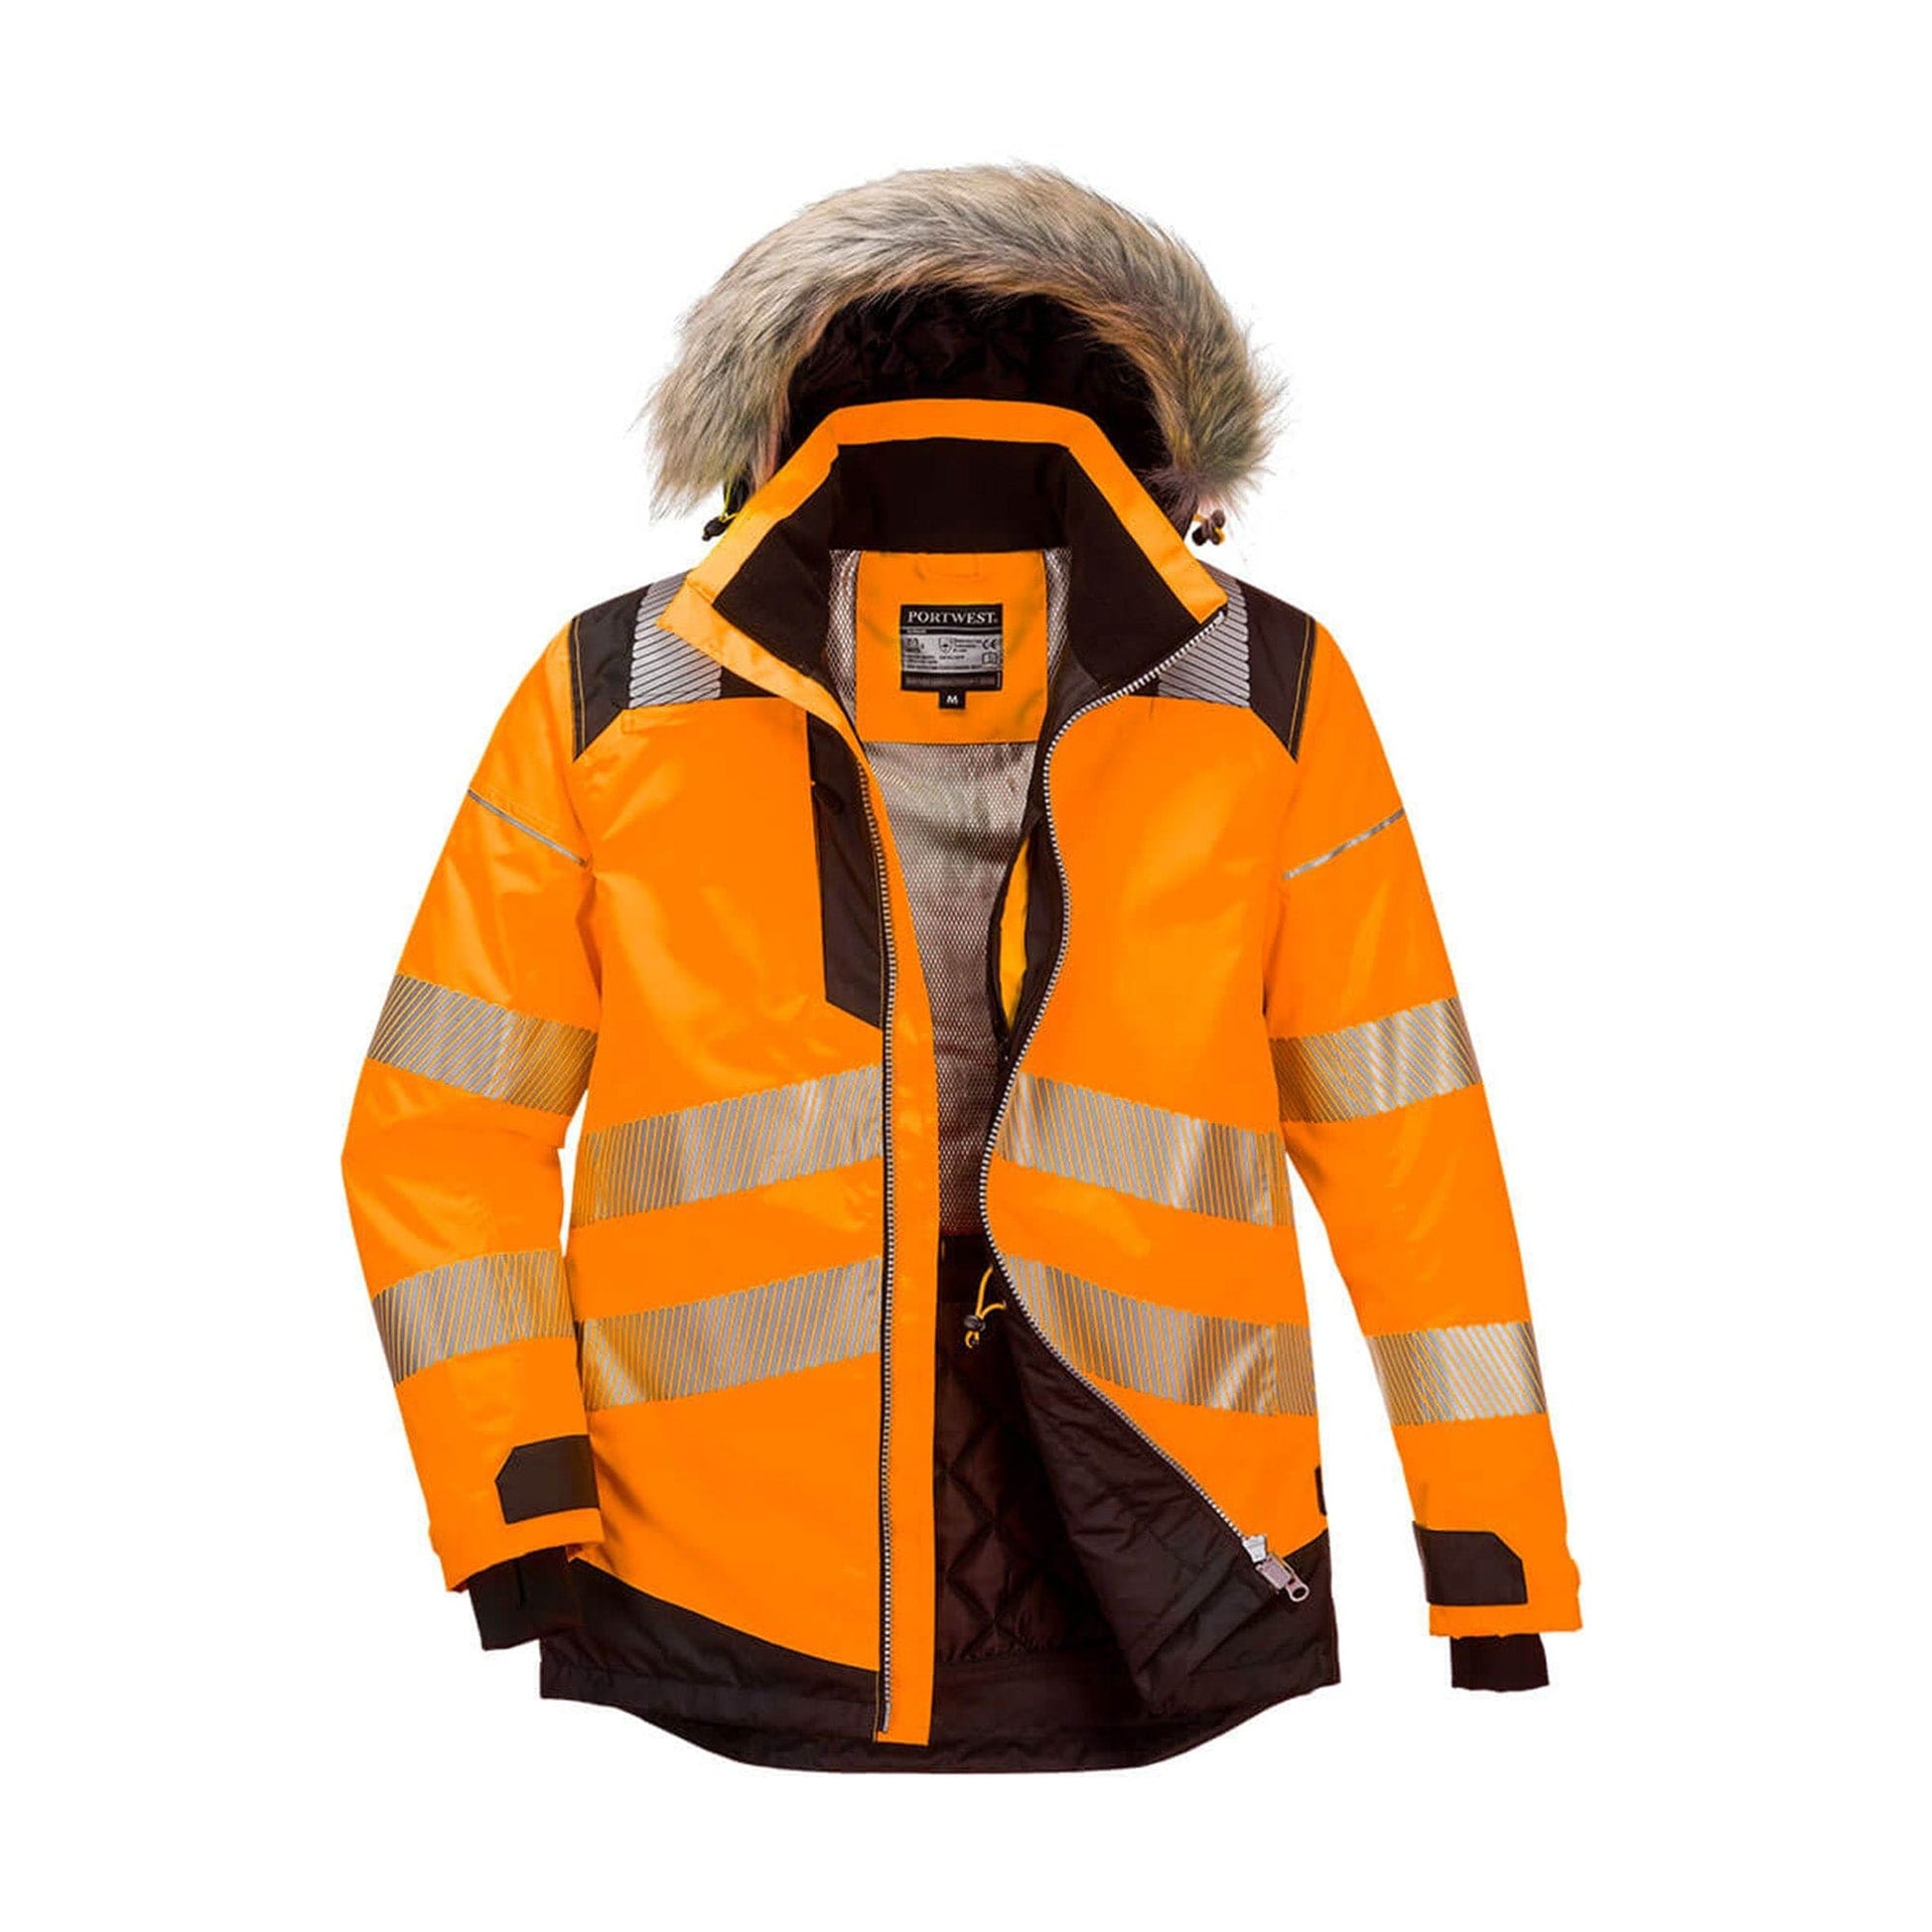 Portwest PW3 Hi-Vis Winter Parka Jacket PW369 Orange/Black